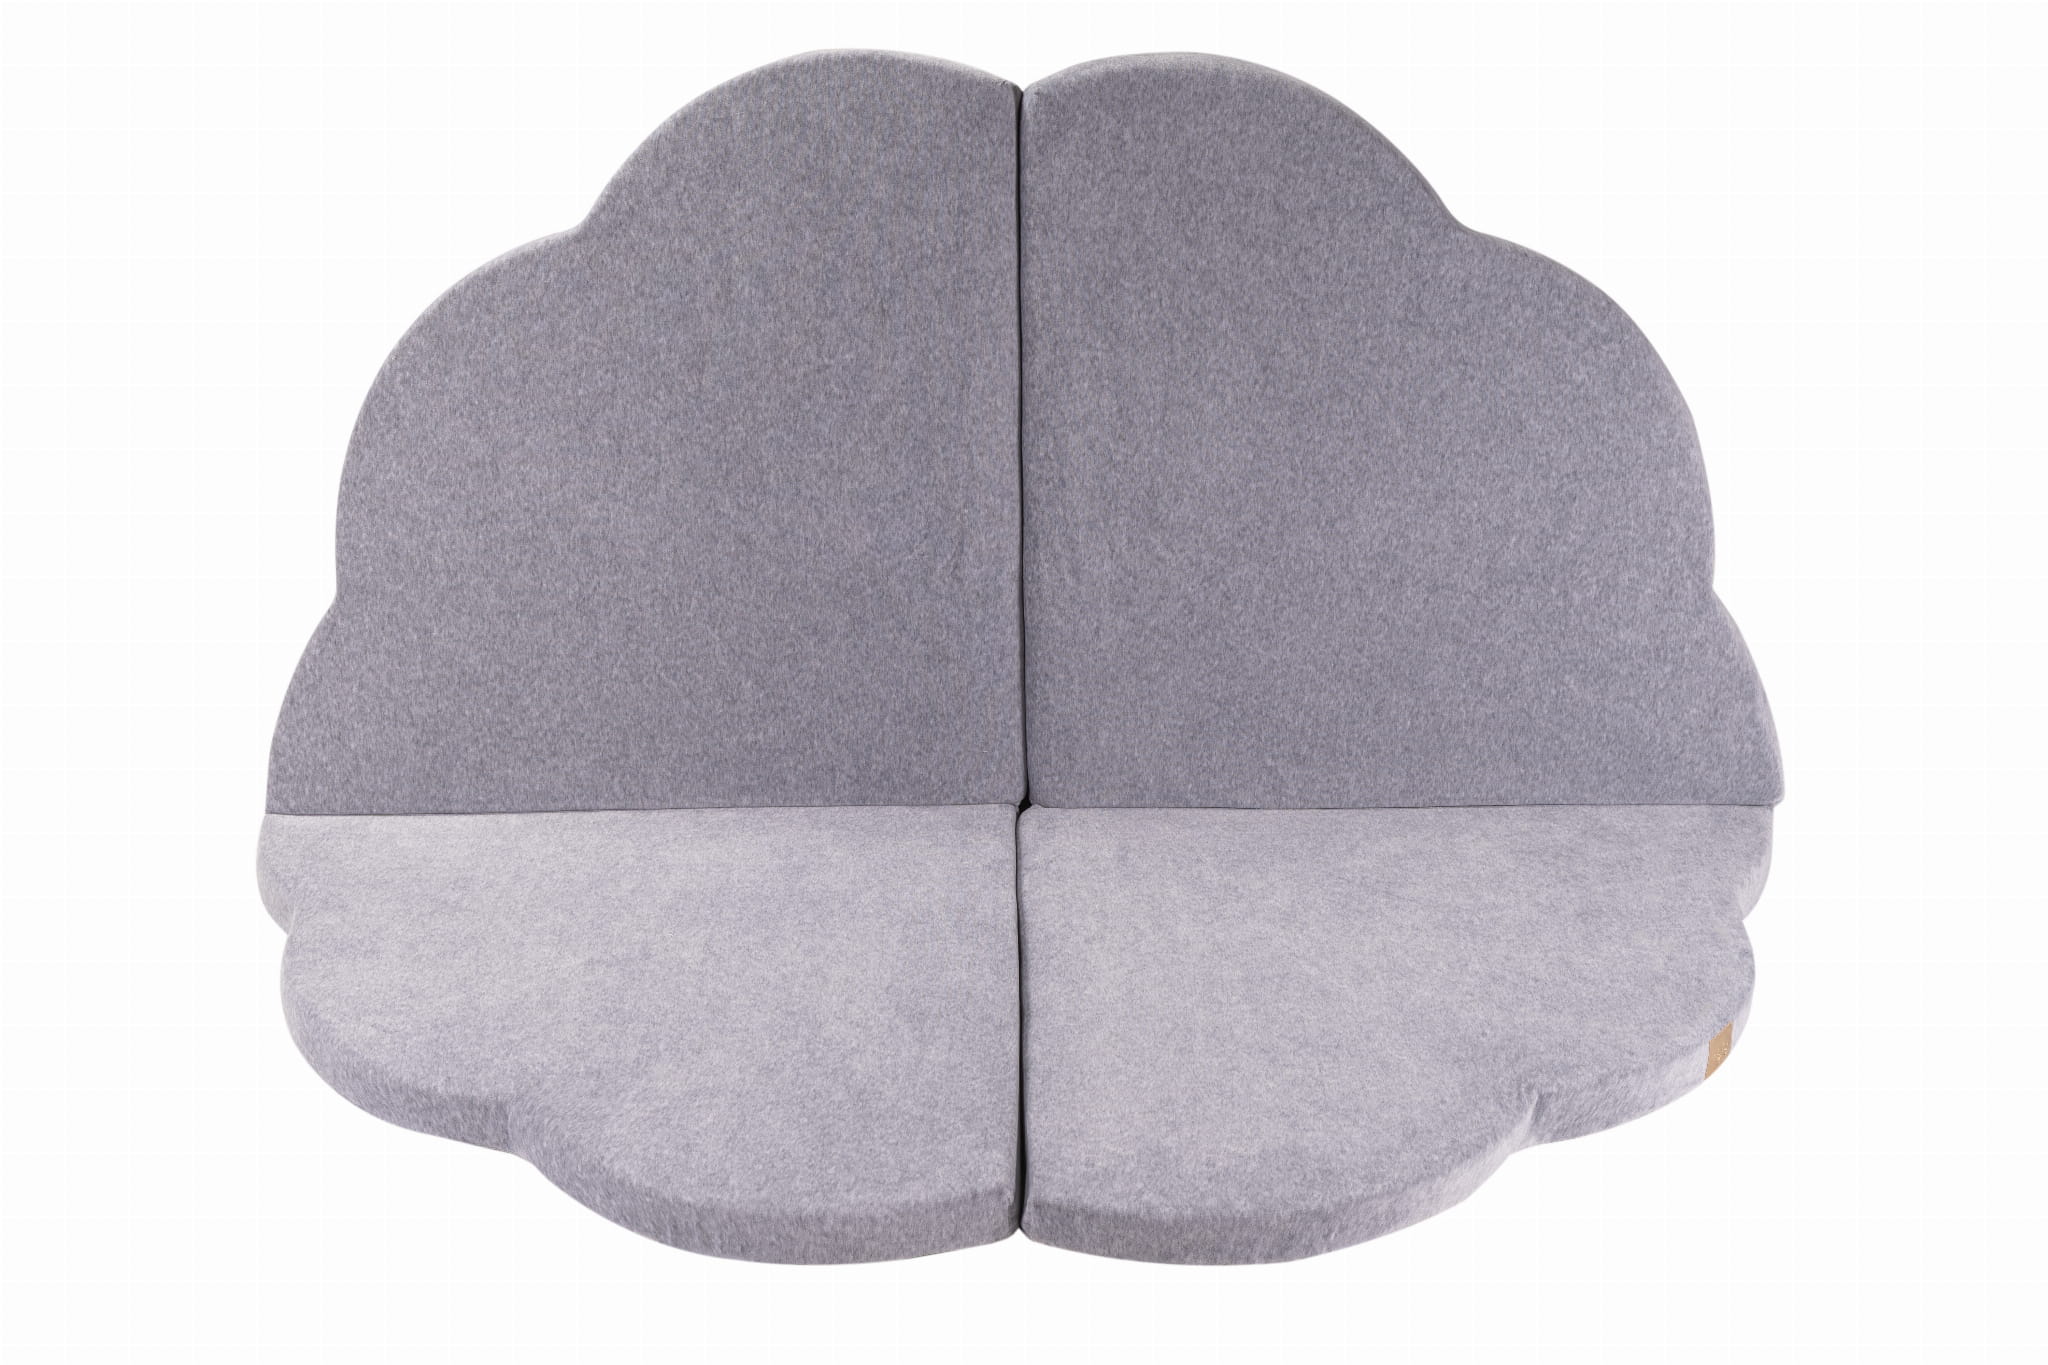 MeowBaby Luxury Cloud Foam Baby Play Mat | Style My Kid, Light Grey product